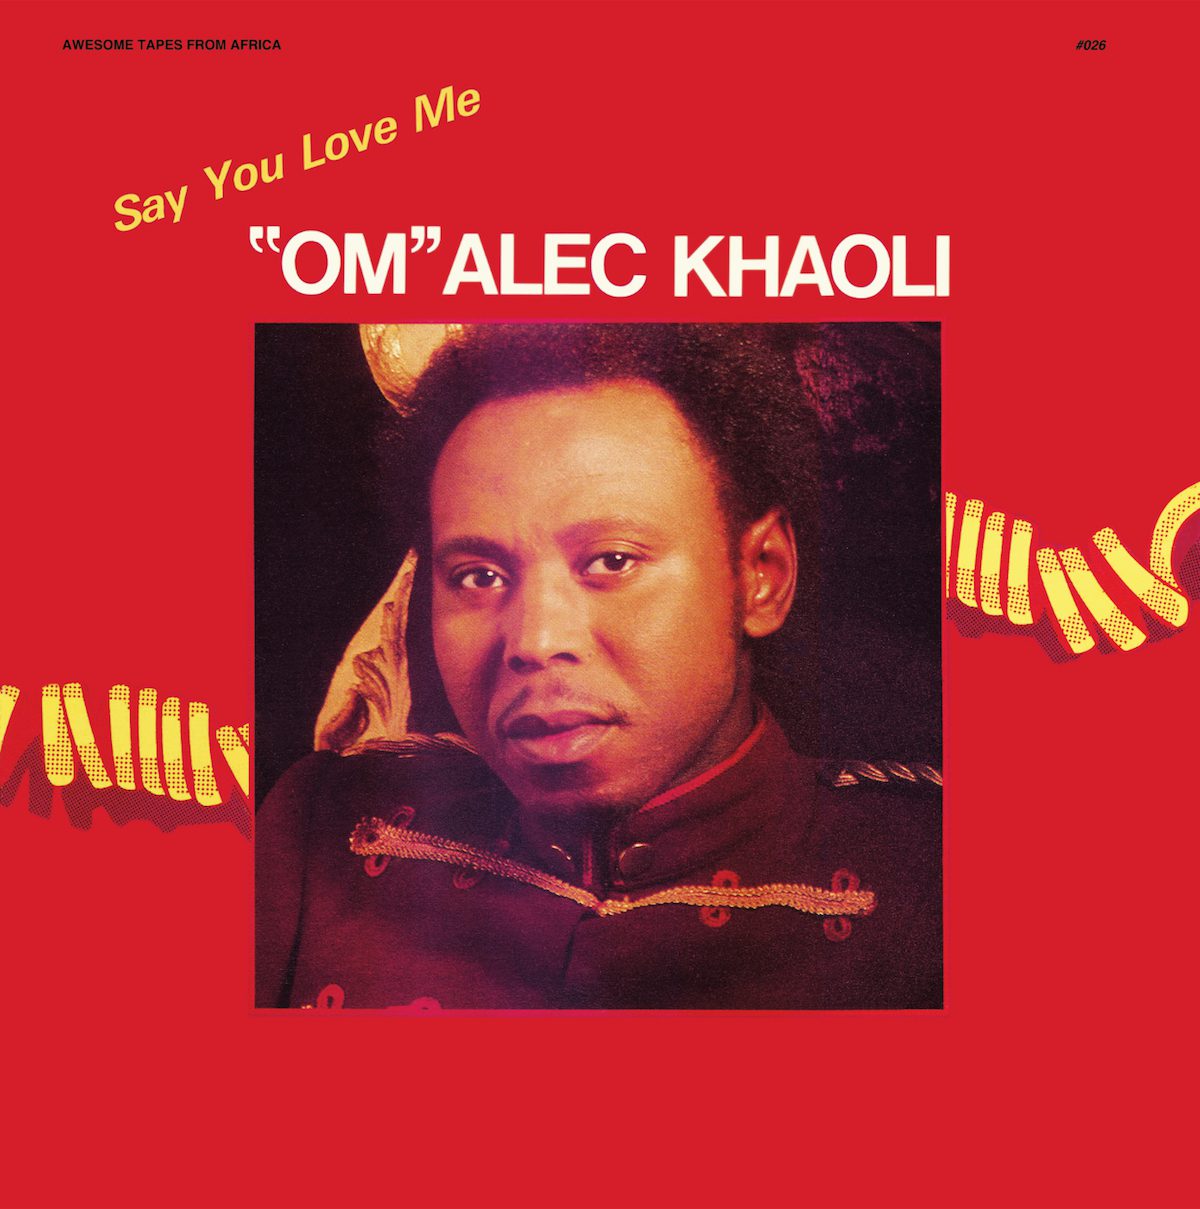 Om Alec Khaoli "Say You Love Me"